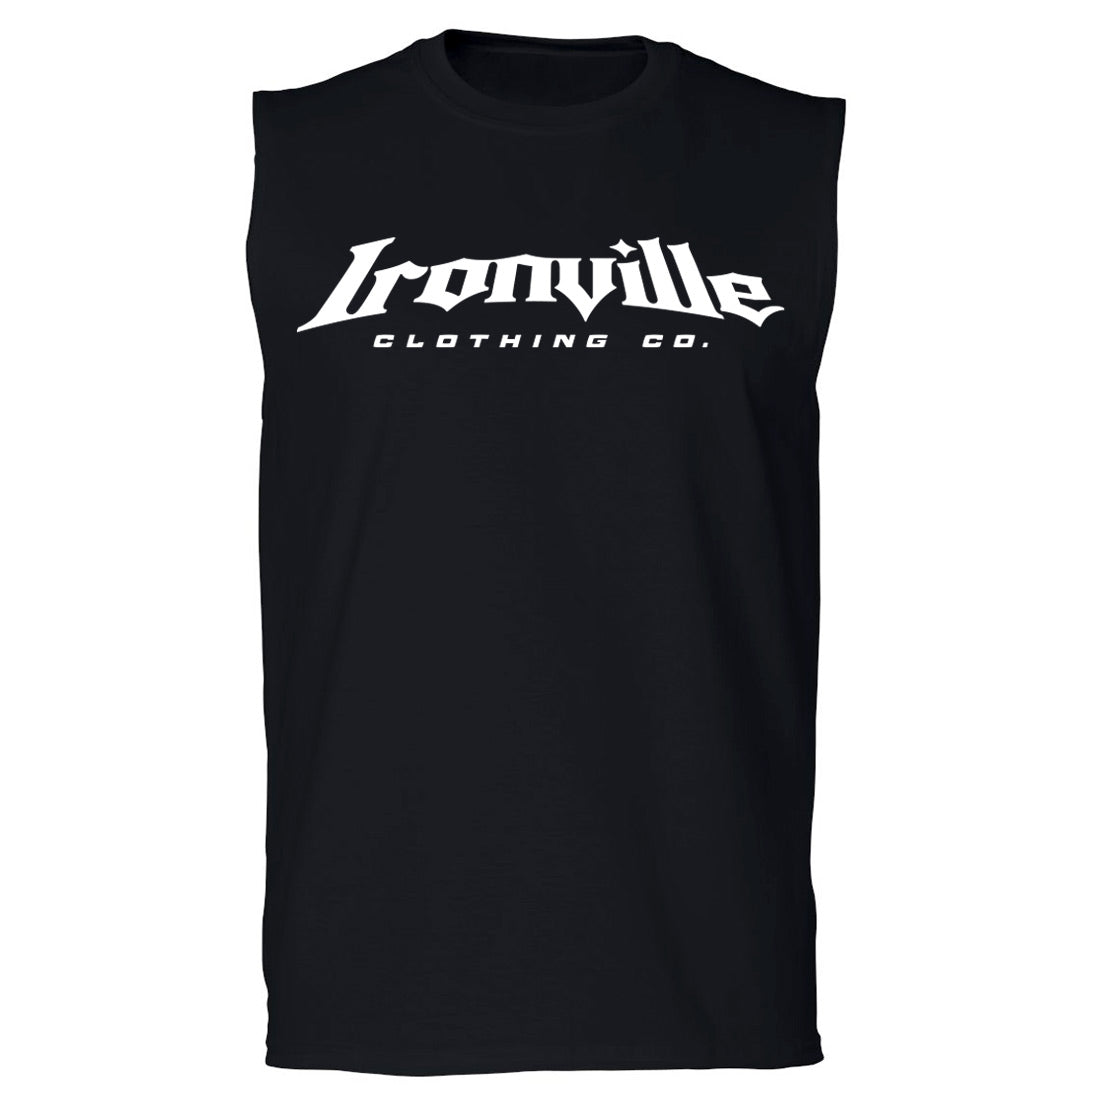 Ironville GYM REAPER Sleeveless Muscle T-shirt